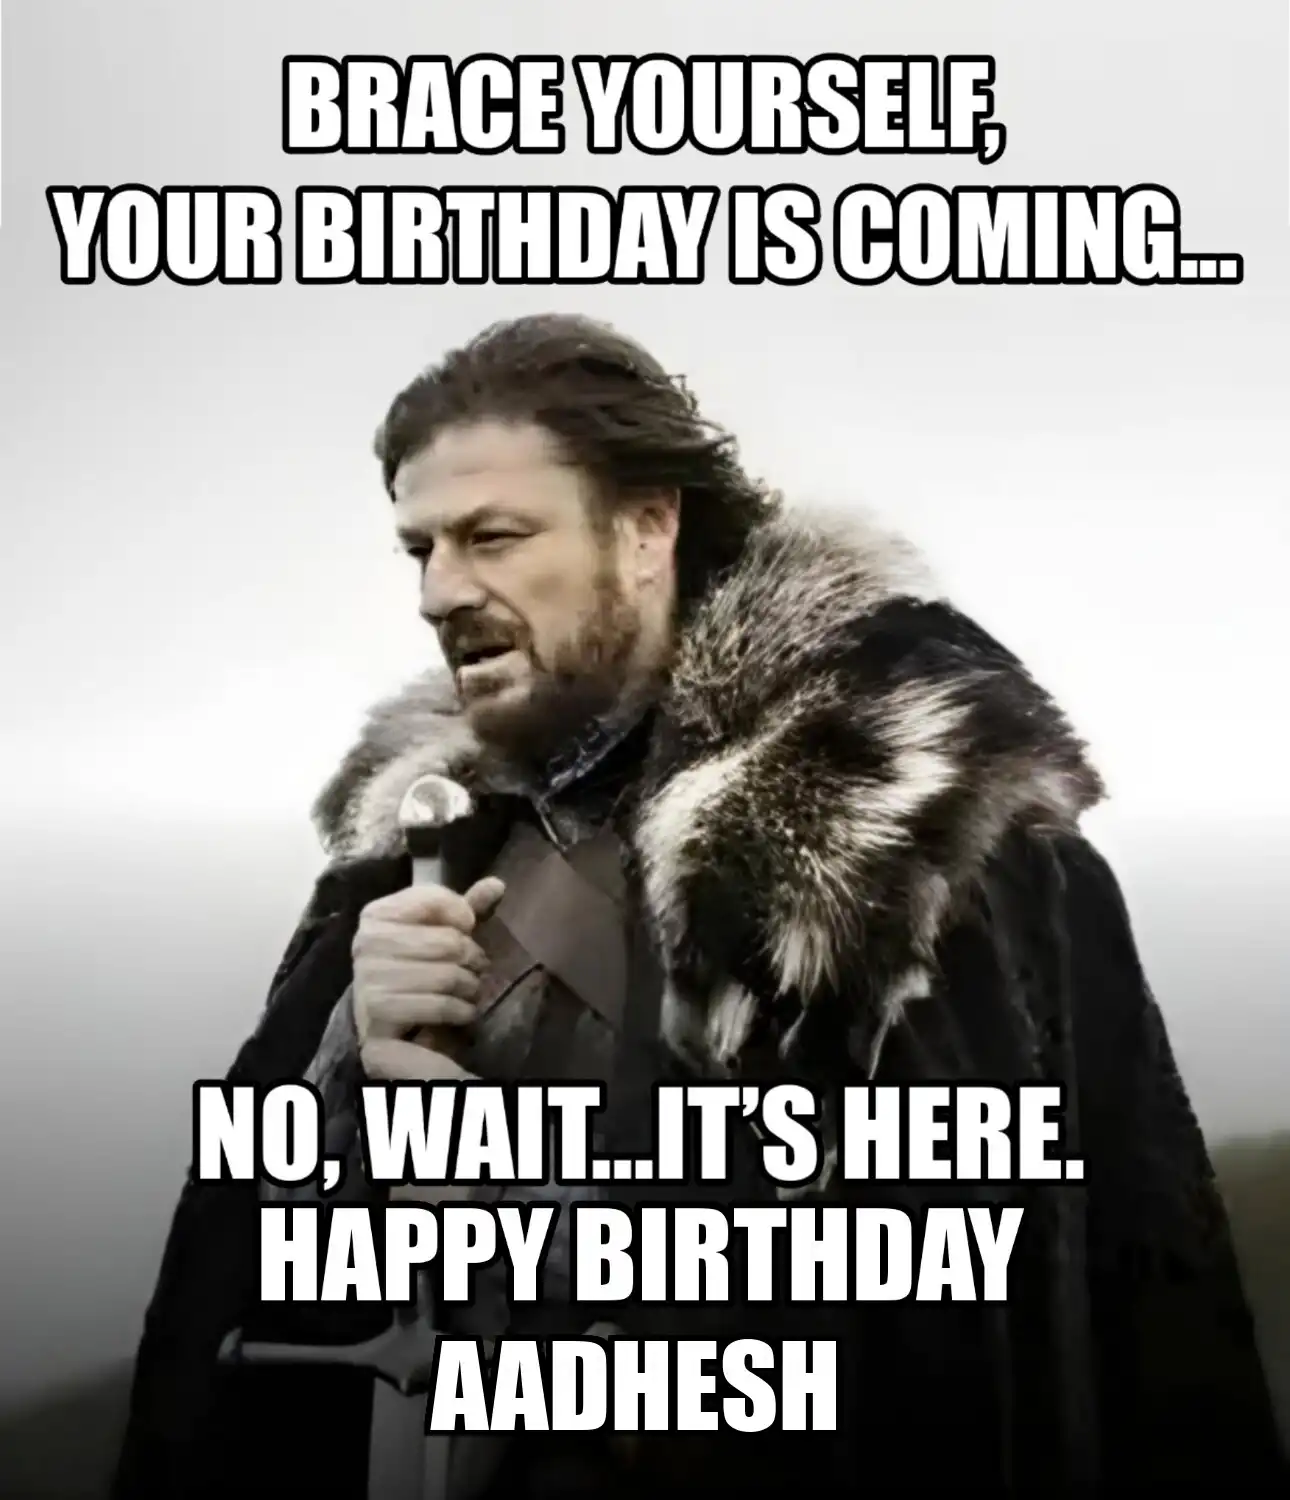 Happy Birthday Aadhesh Brace Yourself Your Birthday Is Coming Meme